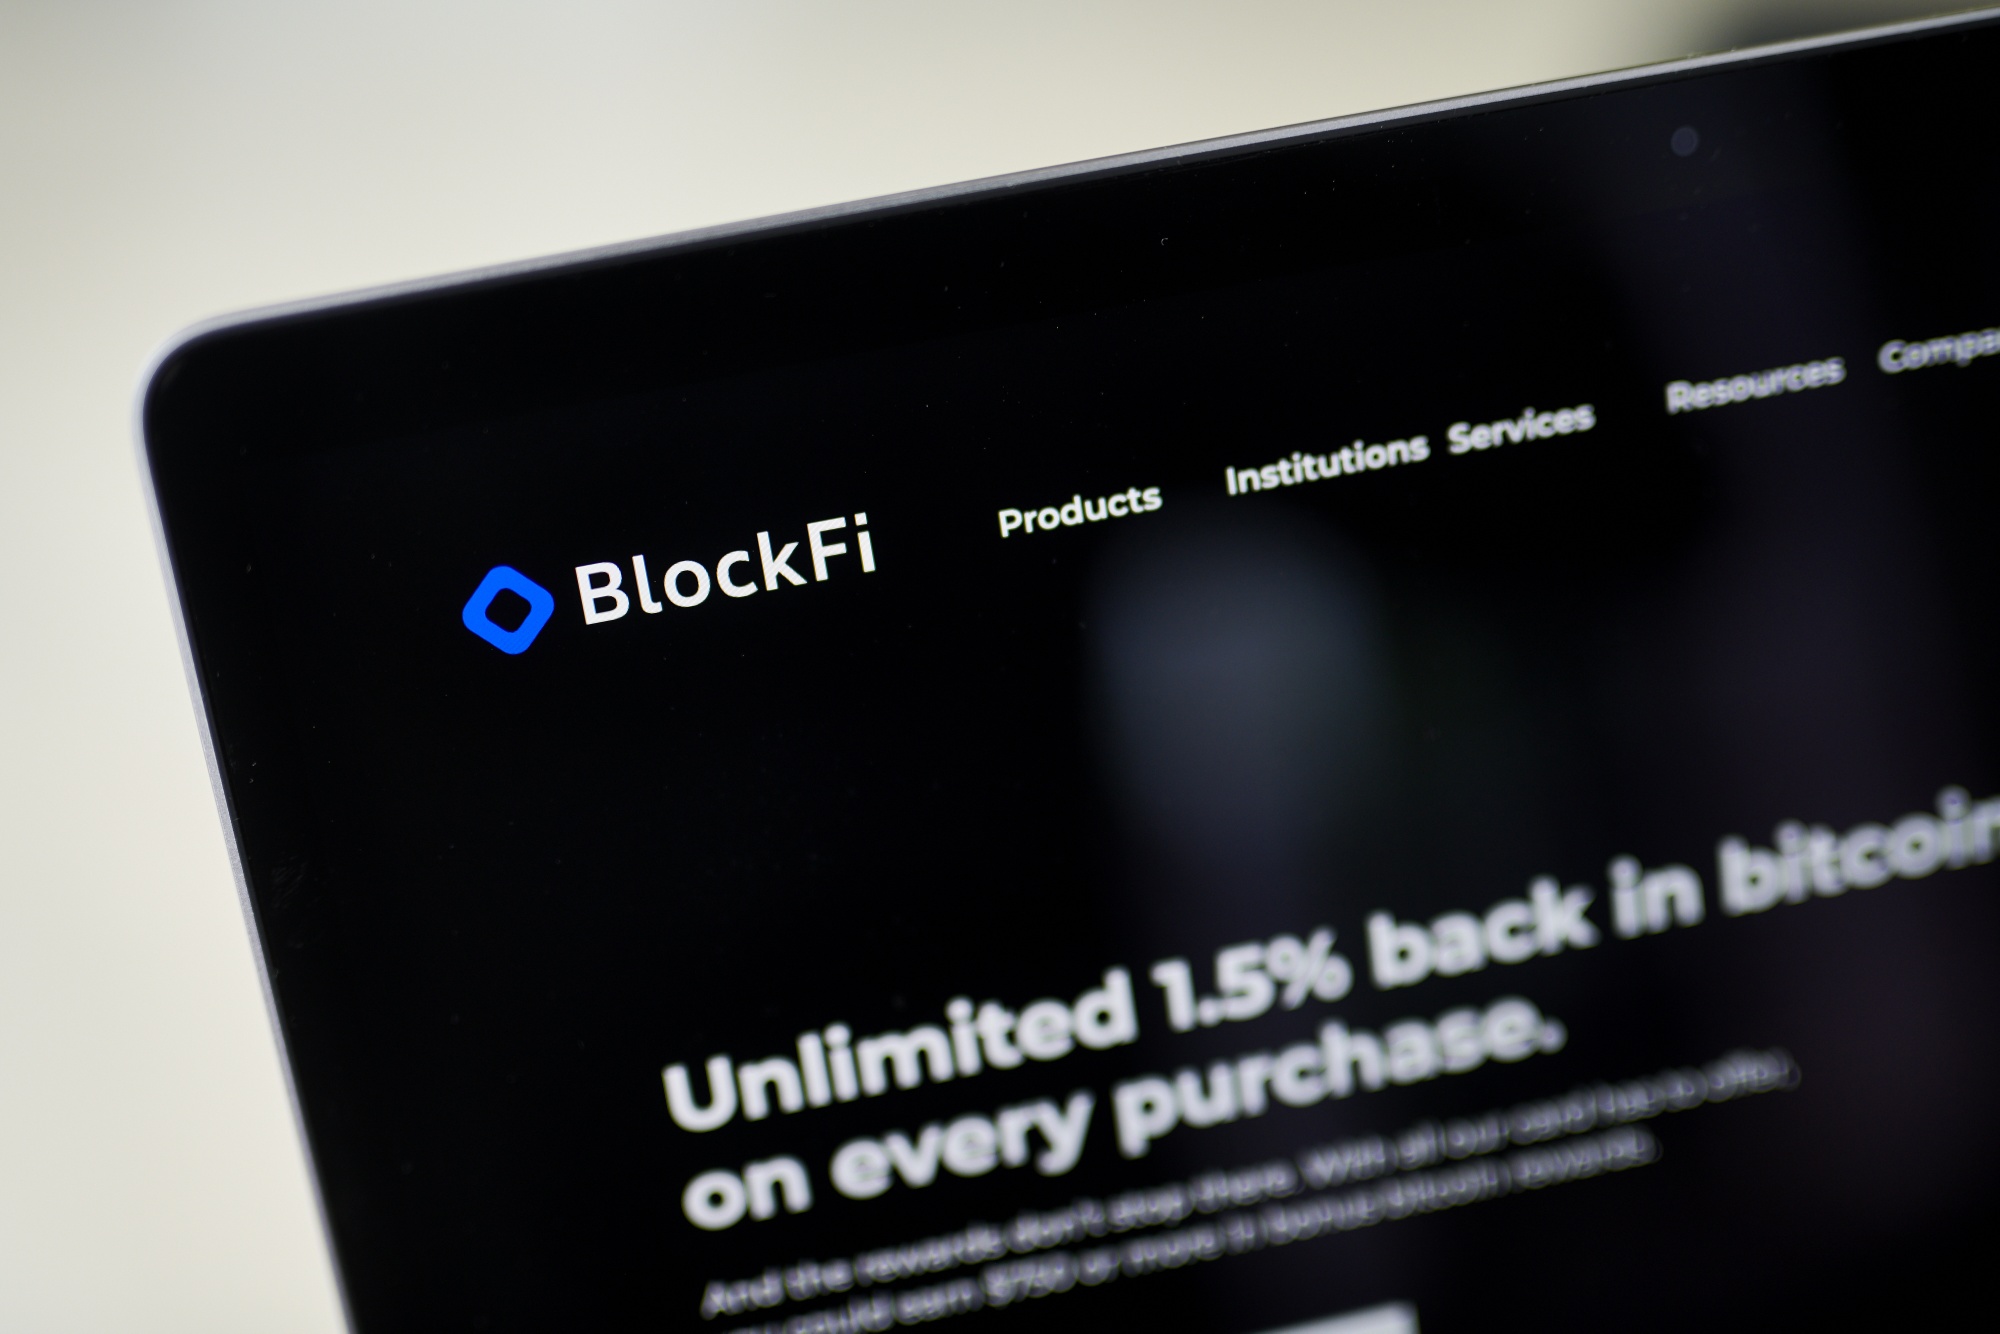 The BlockFi website on a laptop computer.